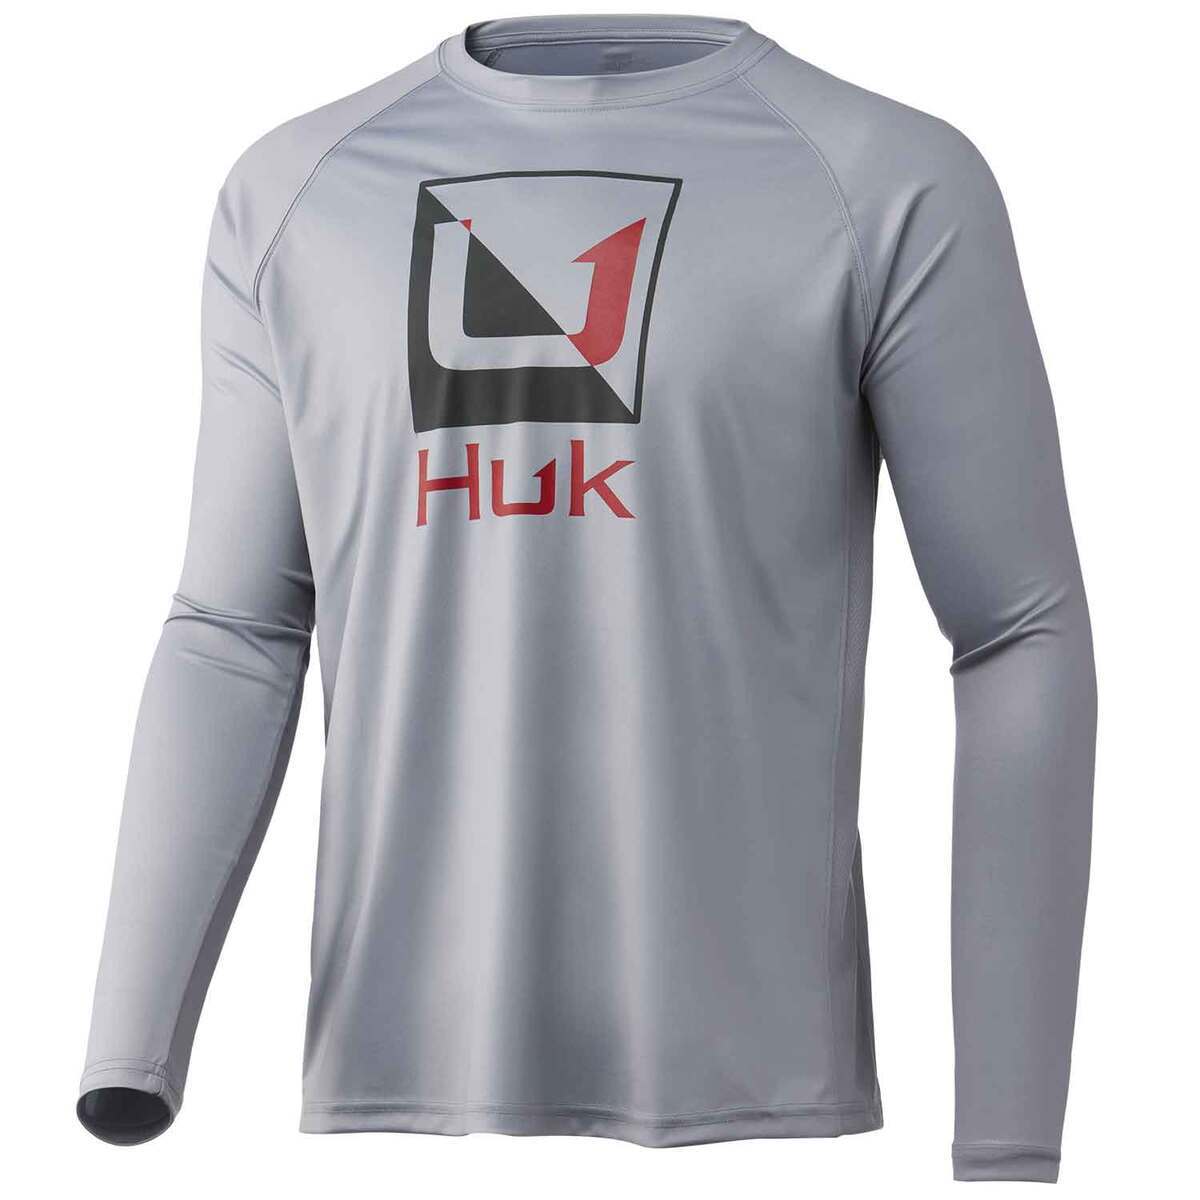 Huk Men's Reflection Pursuit Long Sleeve Fishing Shirt - Overcast Grey - M  - Overcast Grey M